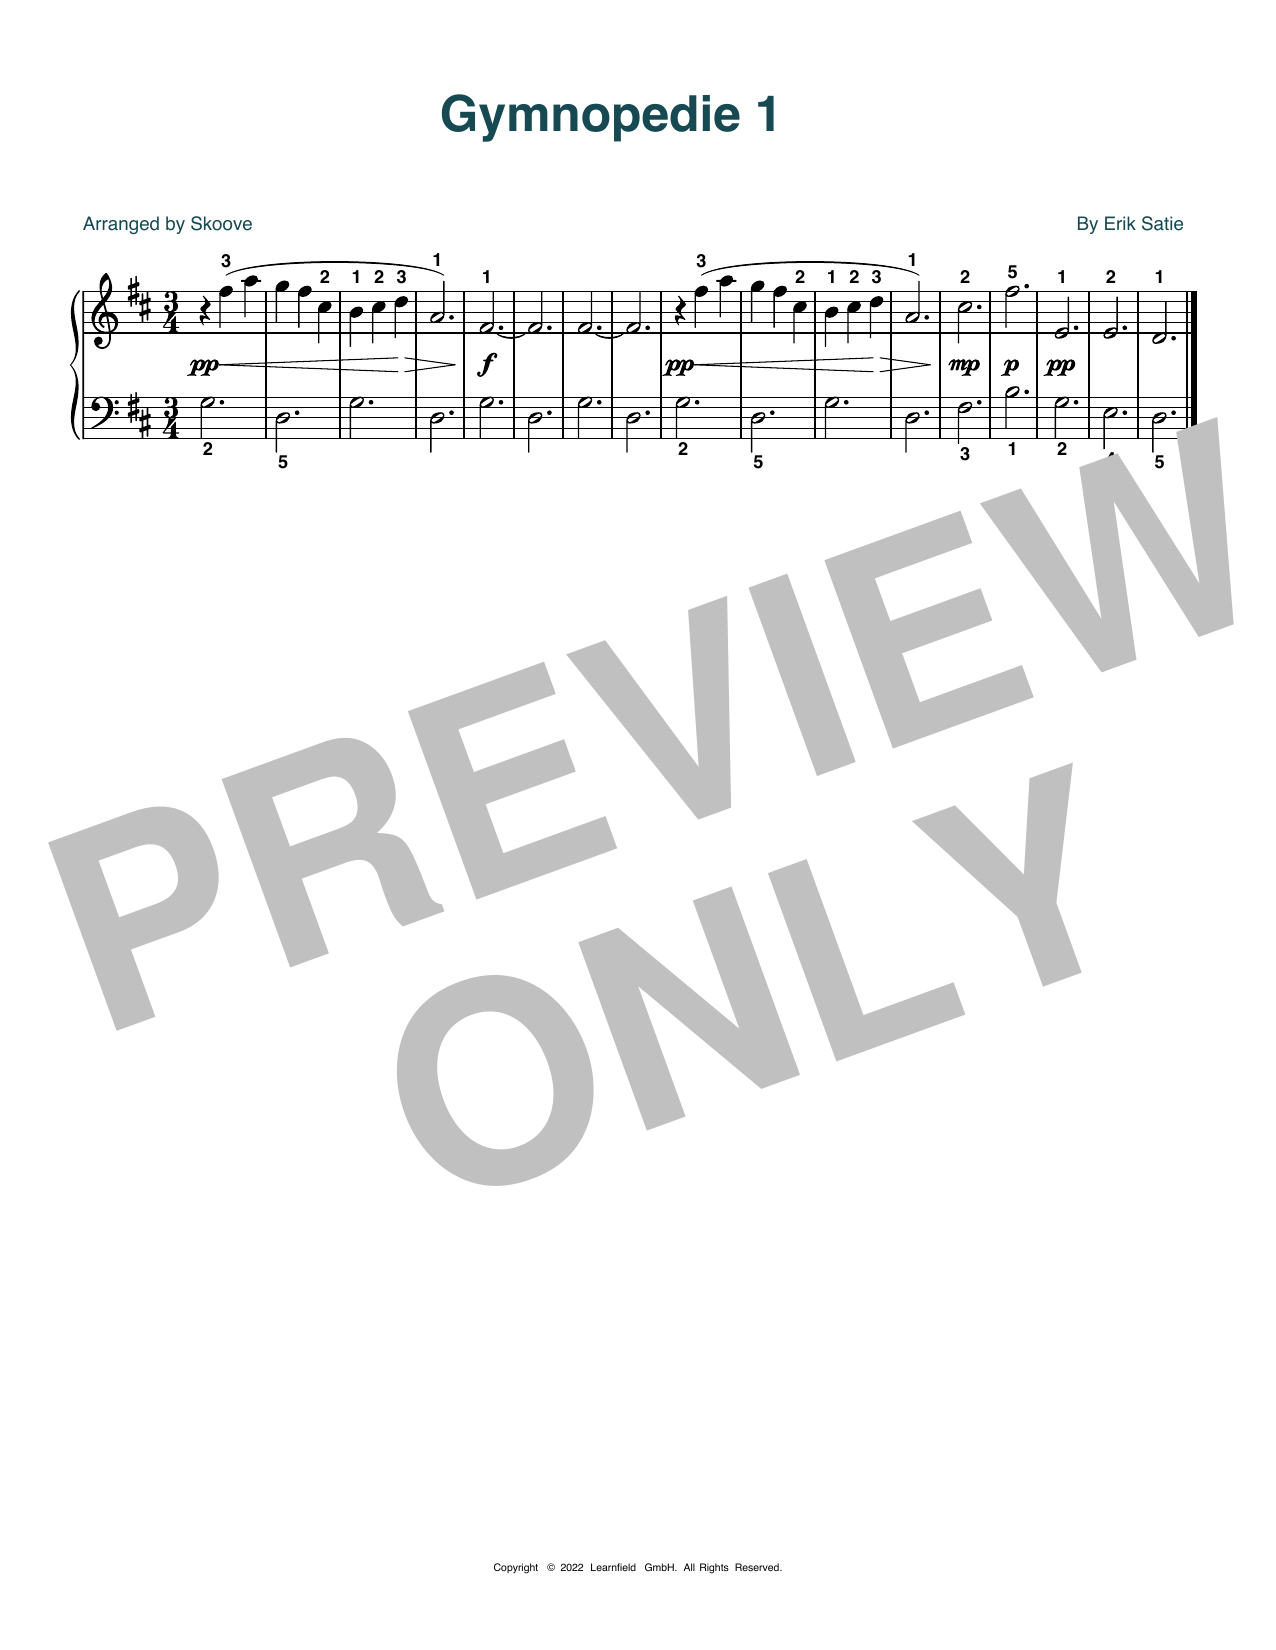 Erik Satie Gymnopedie No. 1 (arr. Skoove) Sheet Music Notes & Chords for Beginner Piano (Abridged) - Download or Print PDF